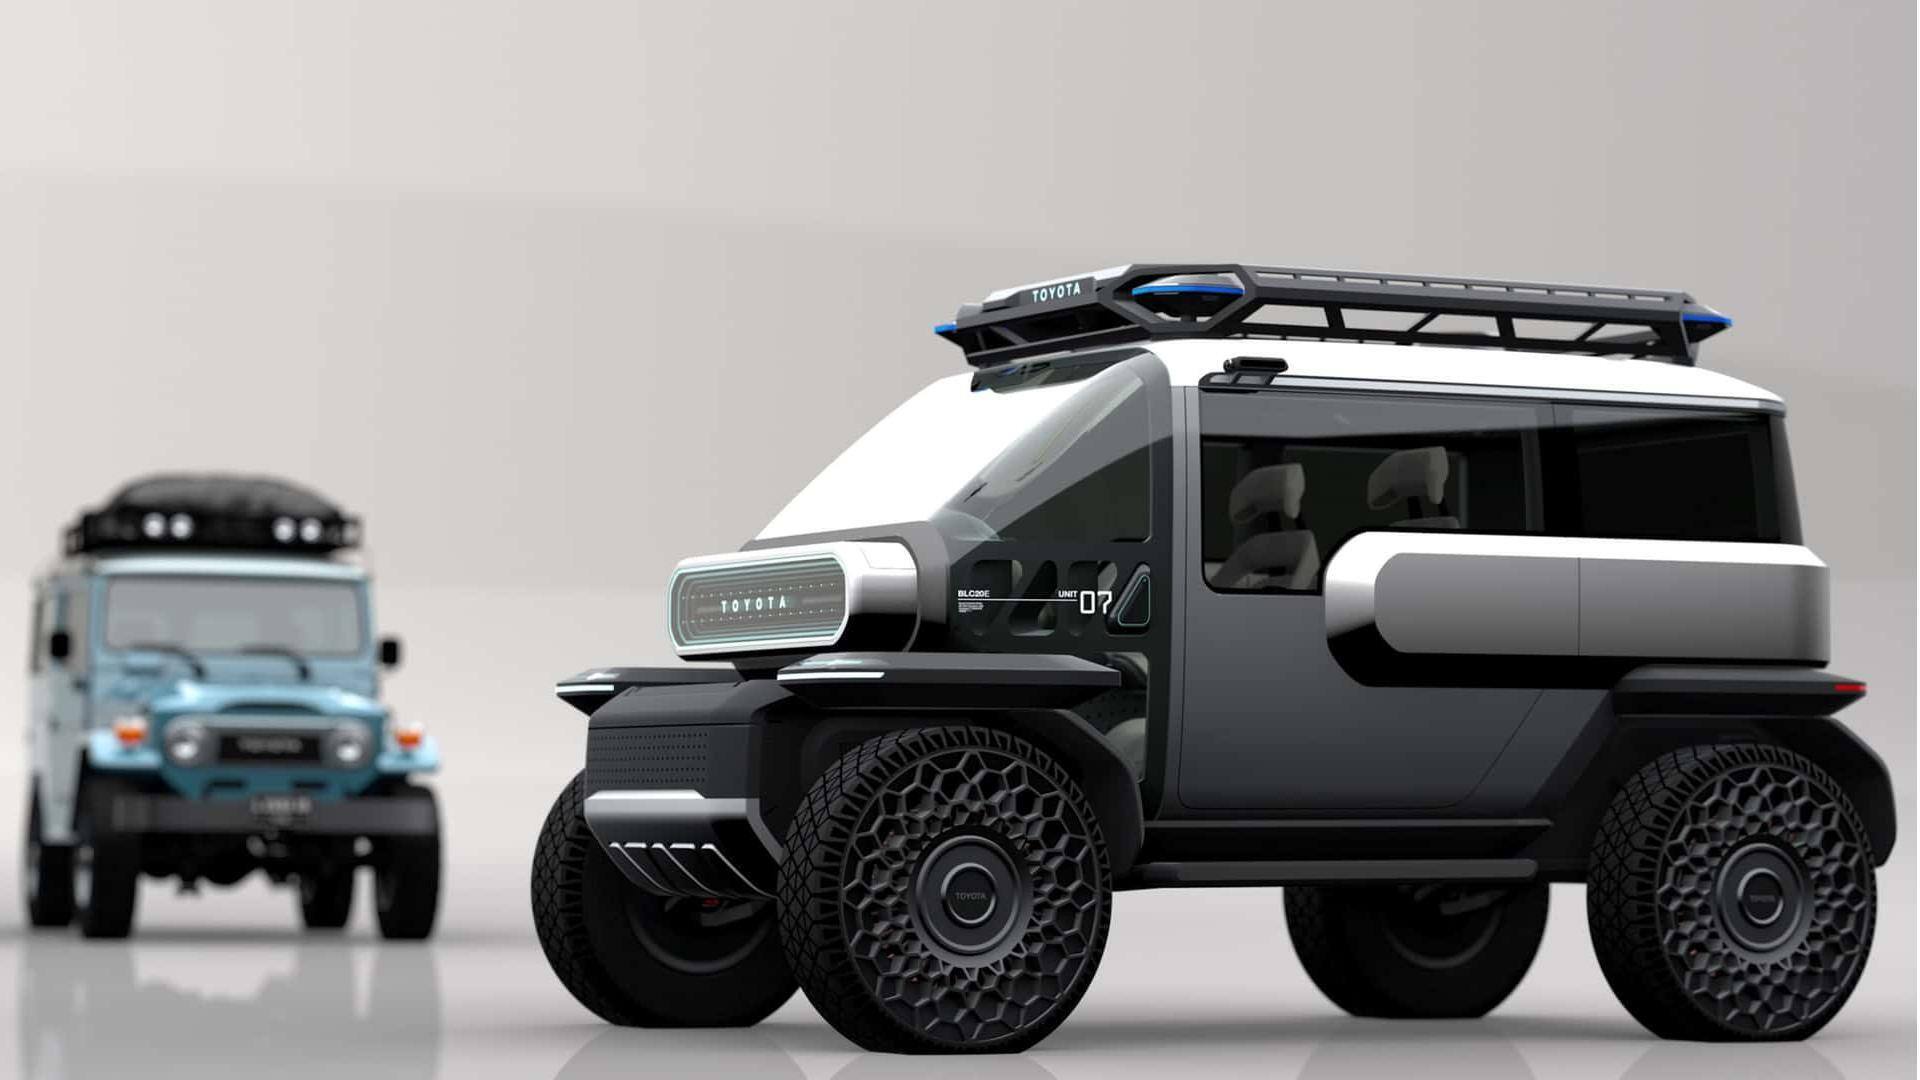 Toyota's Moon rover concept looks like a miniature Land Cruiser